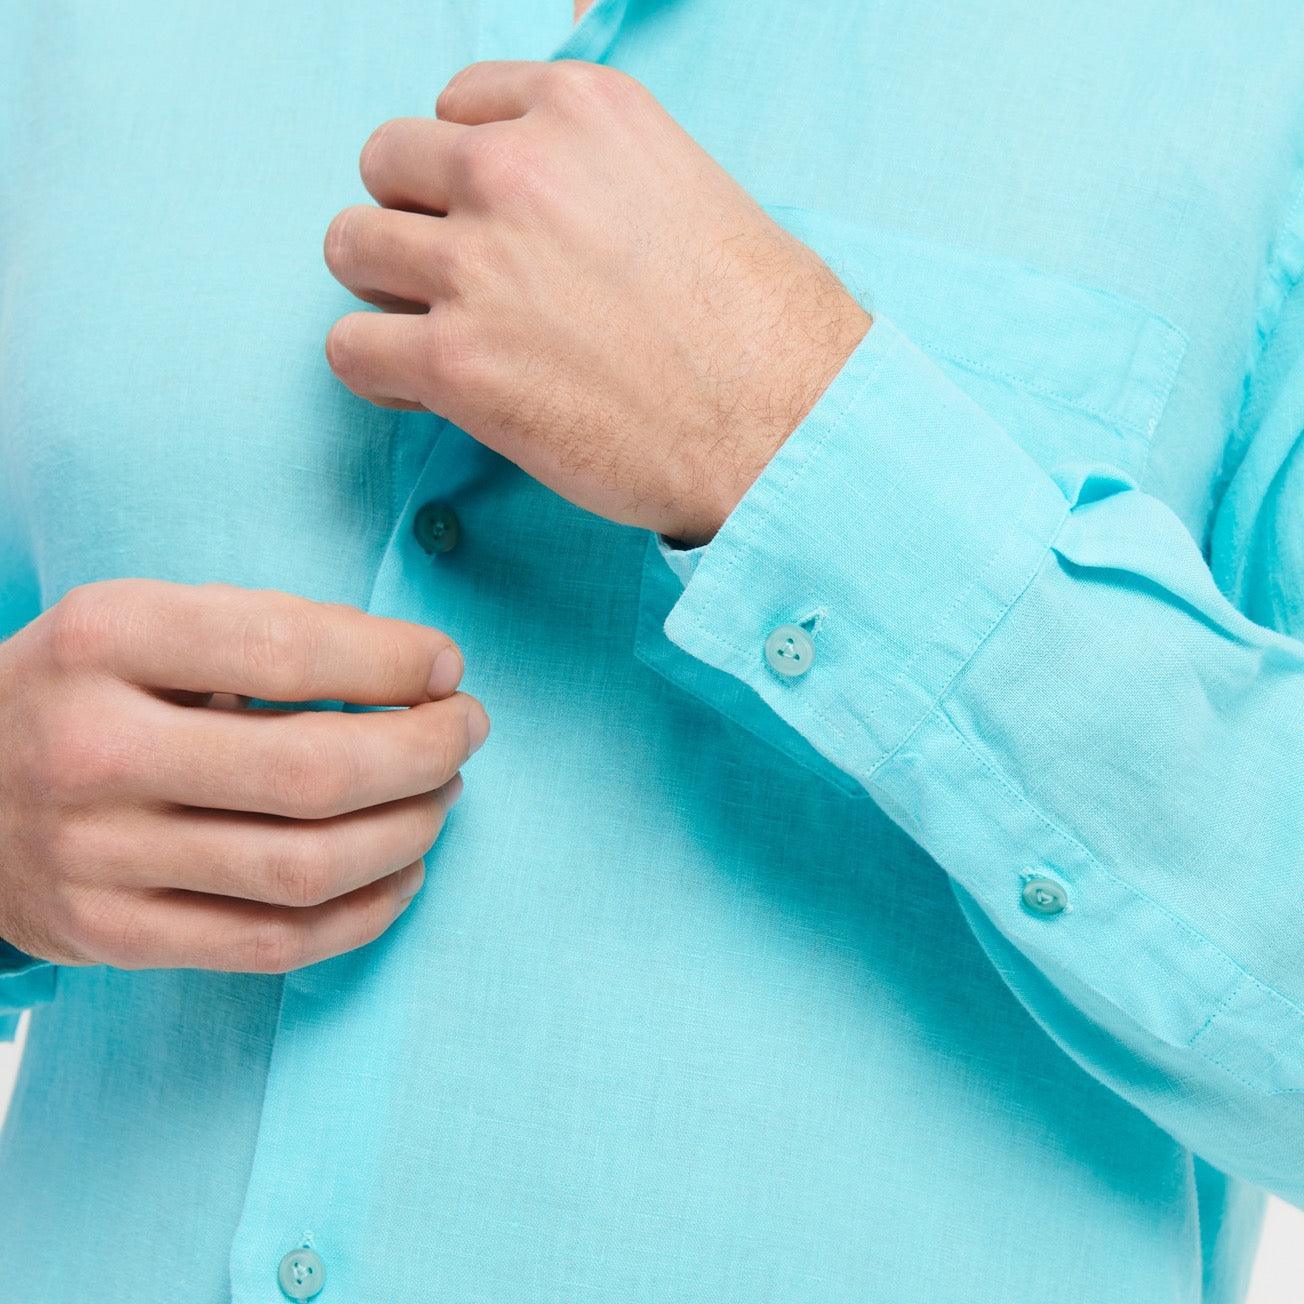 Camisa de lino Solida - Azul Aqua - tiendadicons.com